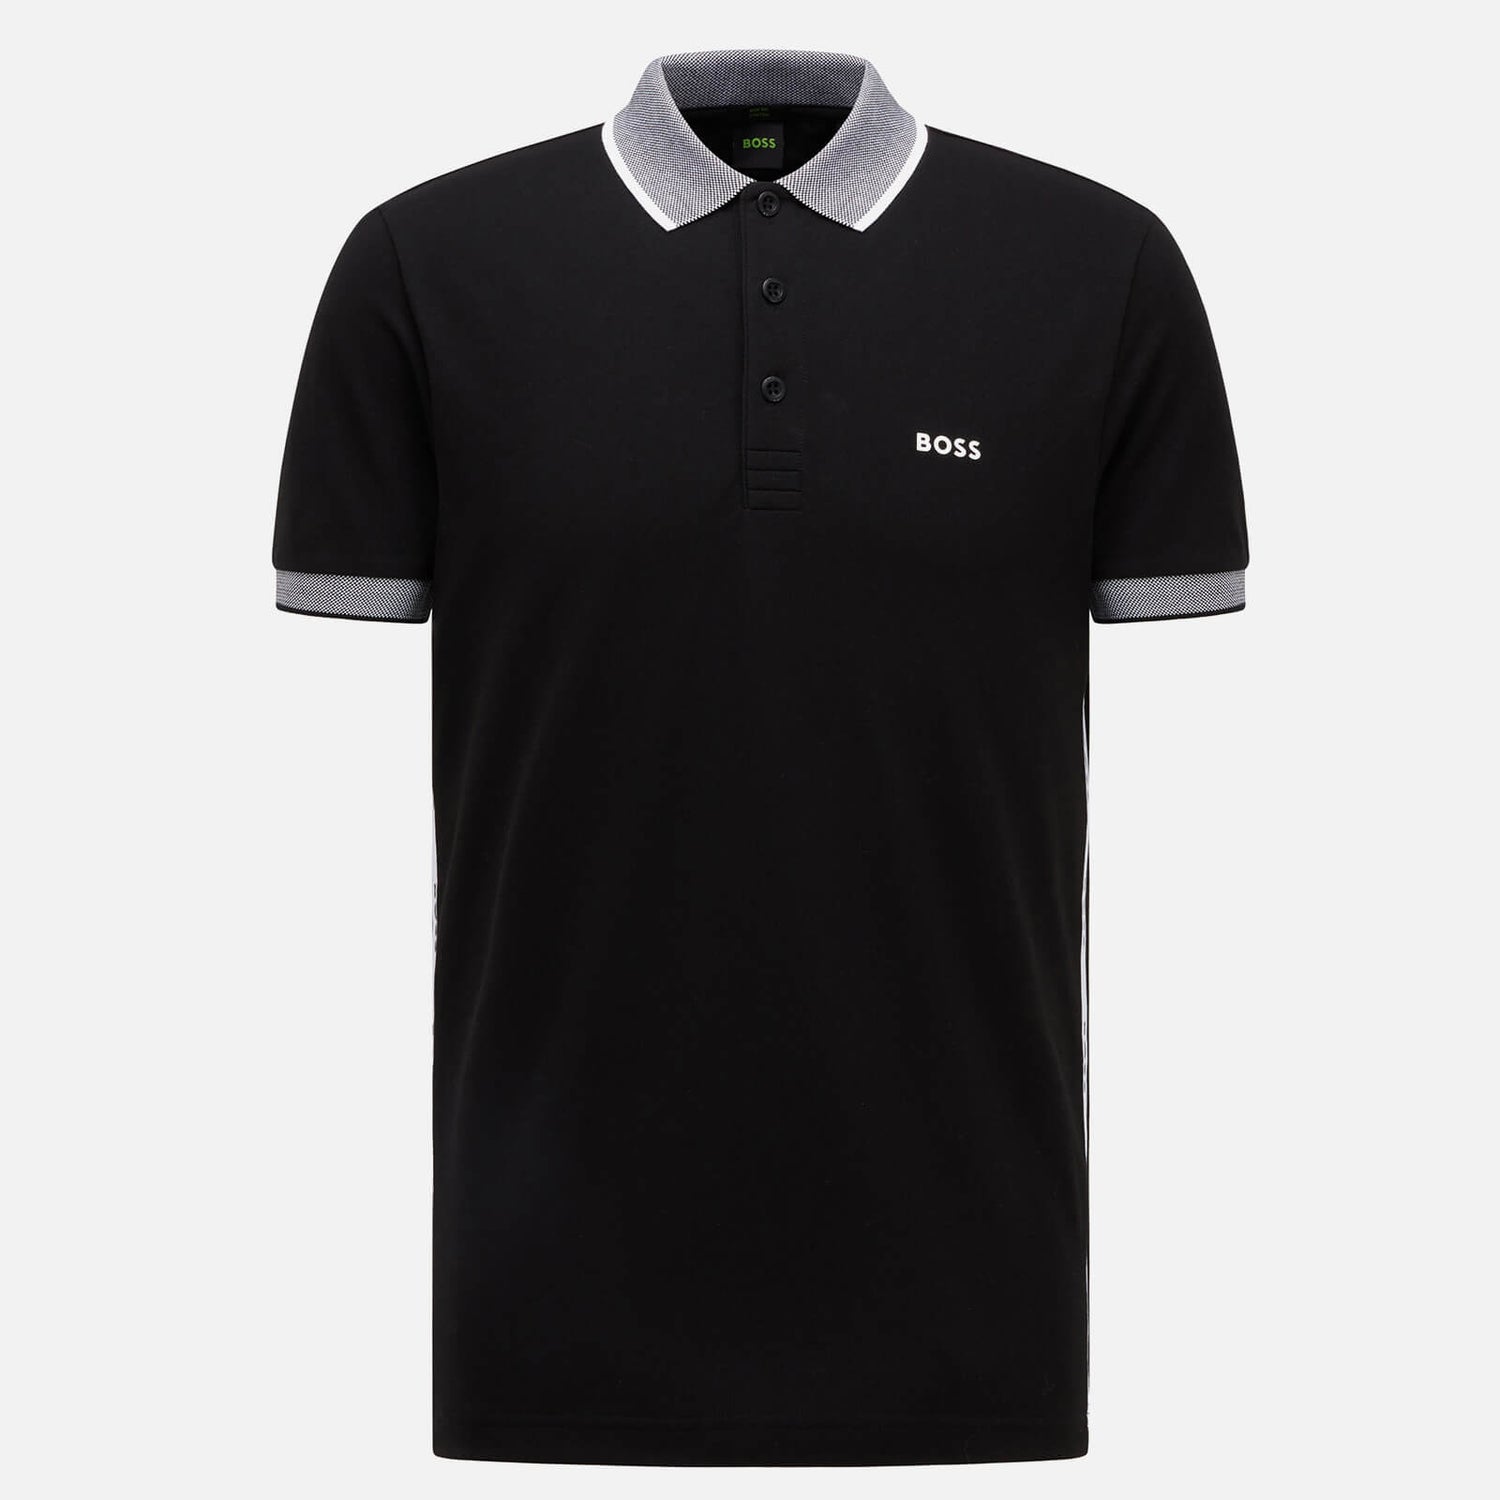 BOSS Athleisure Men's Paule Polo Shirt - Black - S